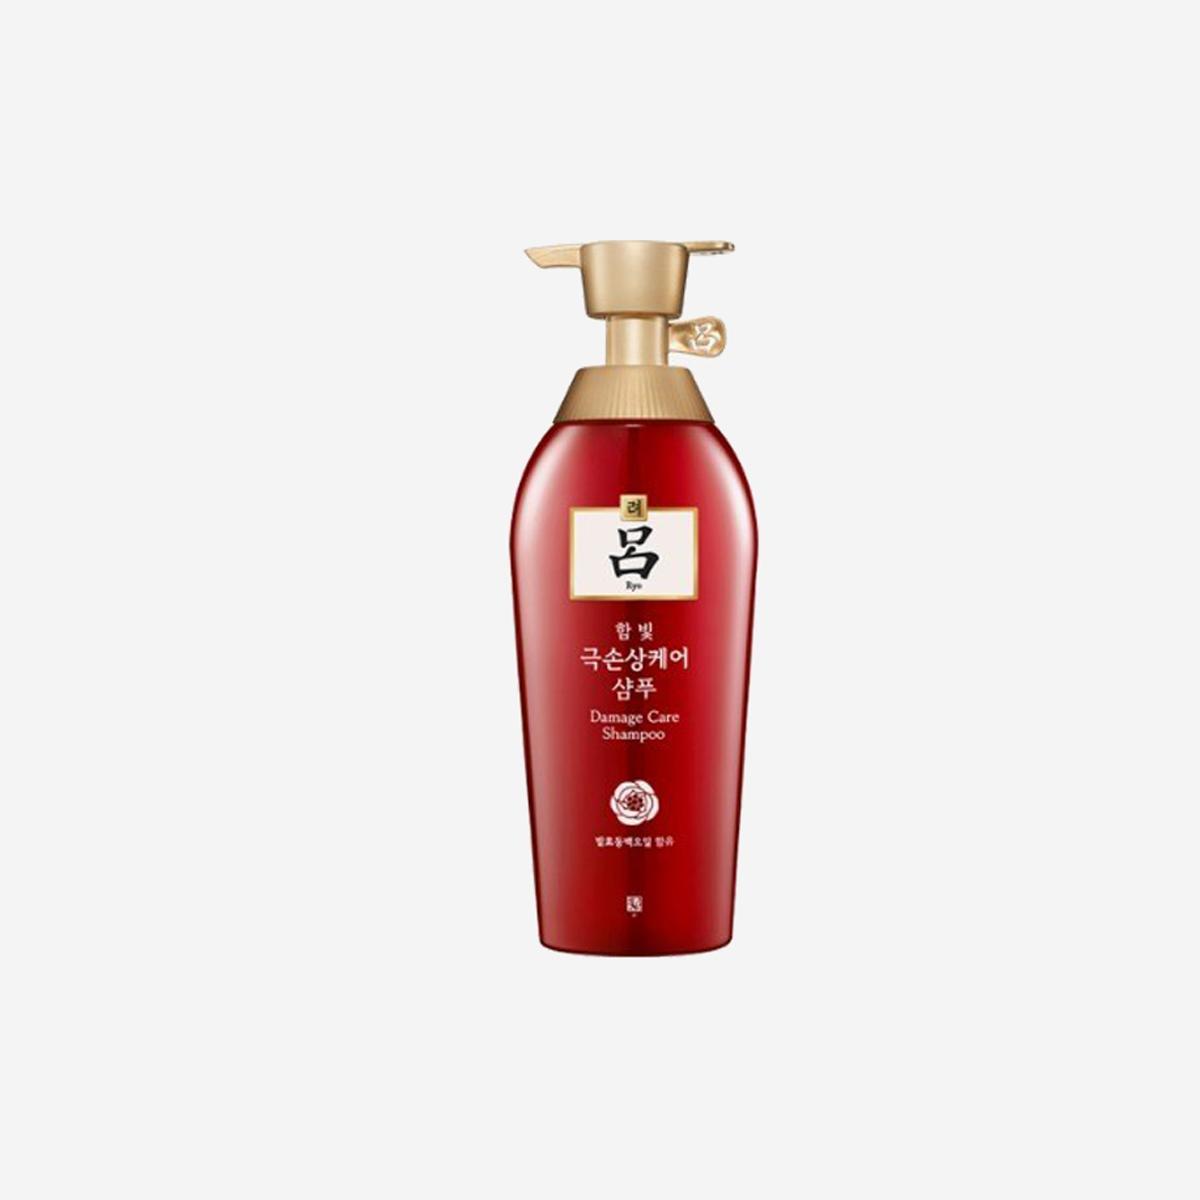 korean brand ryo's Hambit Damage Care Shampoo bottle